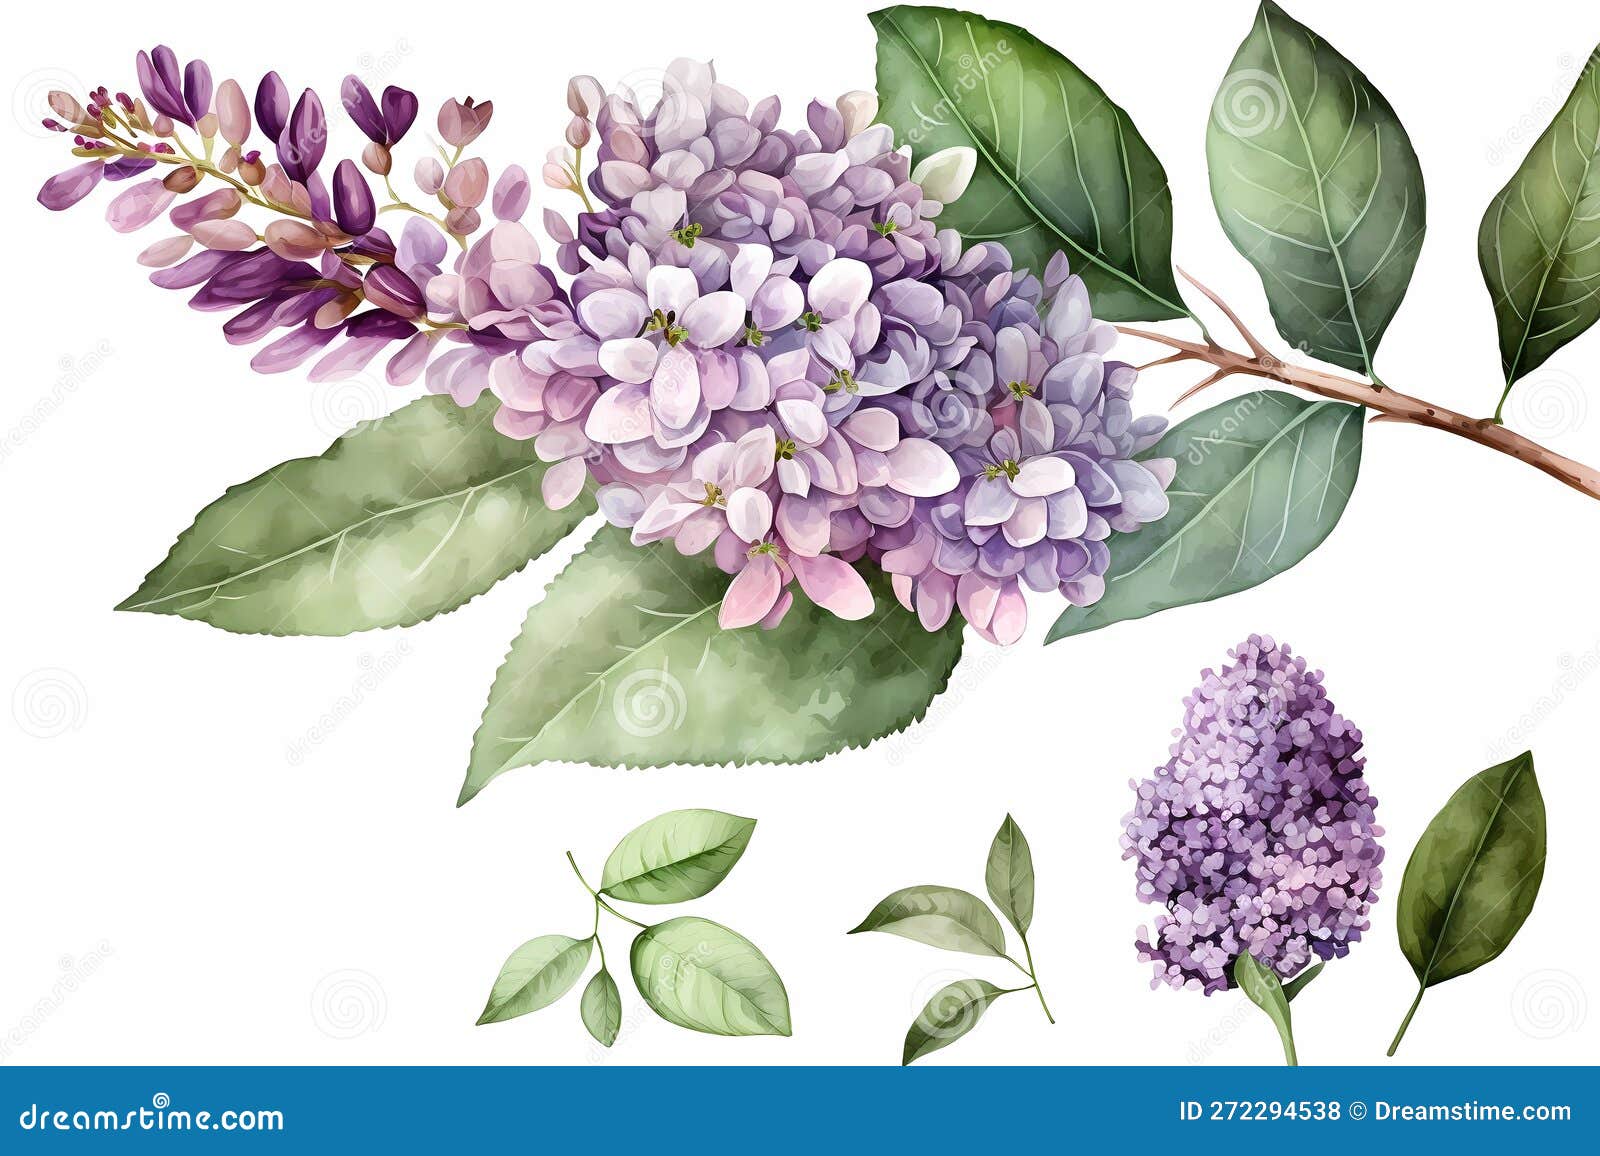 Lavender Spiroglyphics Coloring Book: Beautiful Purple Flower